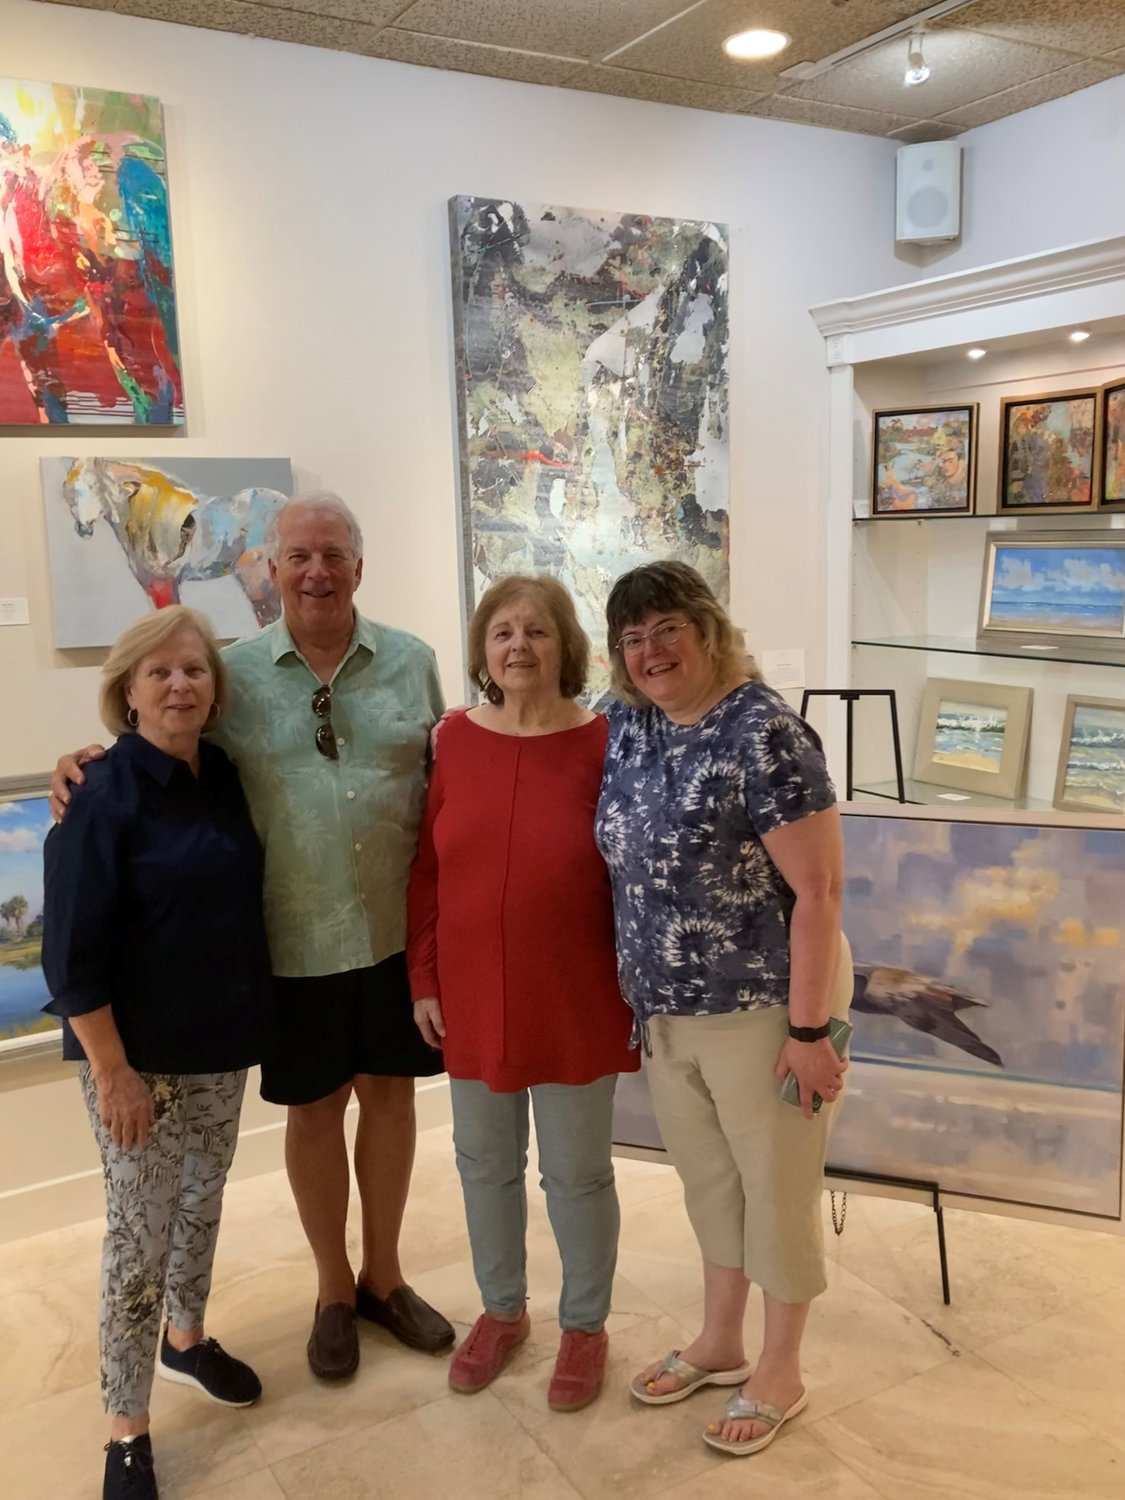 Susan Siegmund (far left) is the owner of Art on Centre in downtown Fernandina Beach.